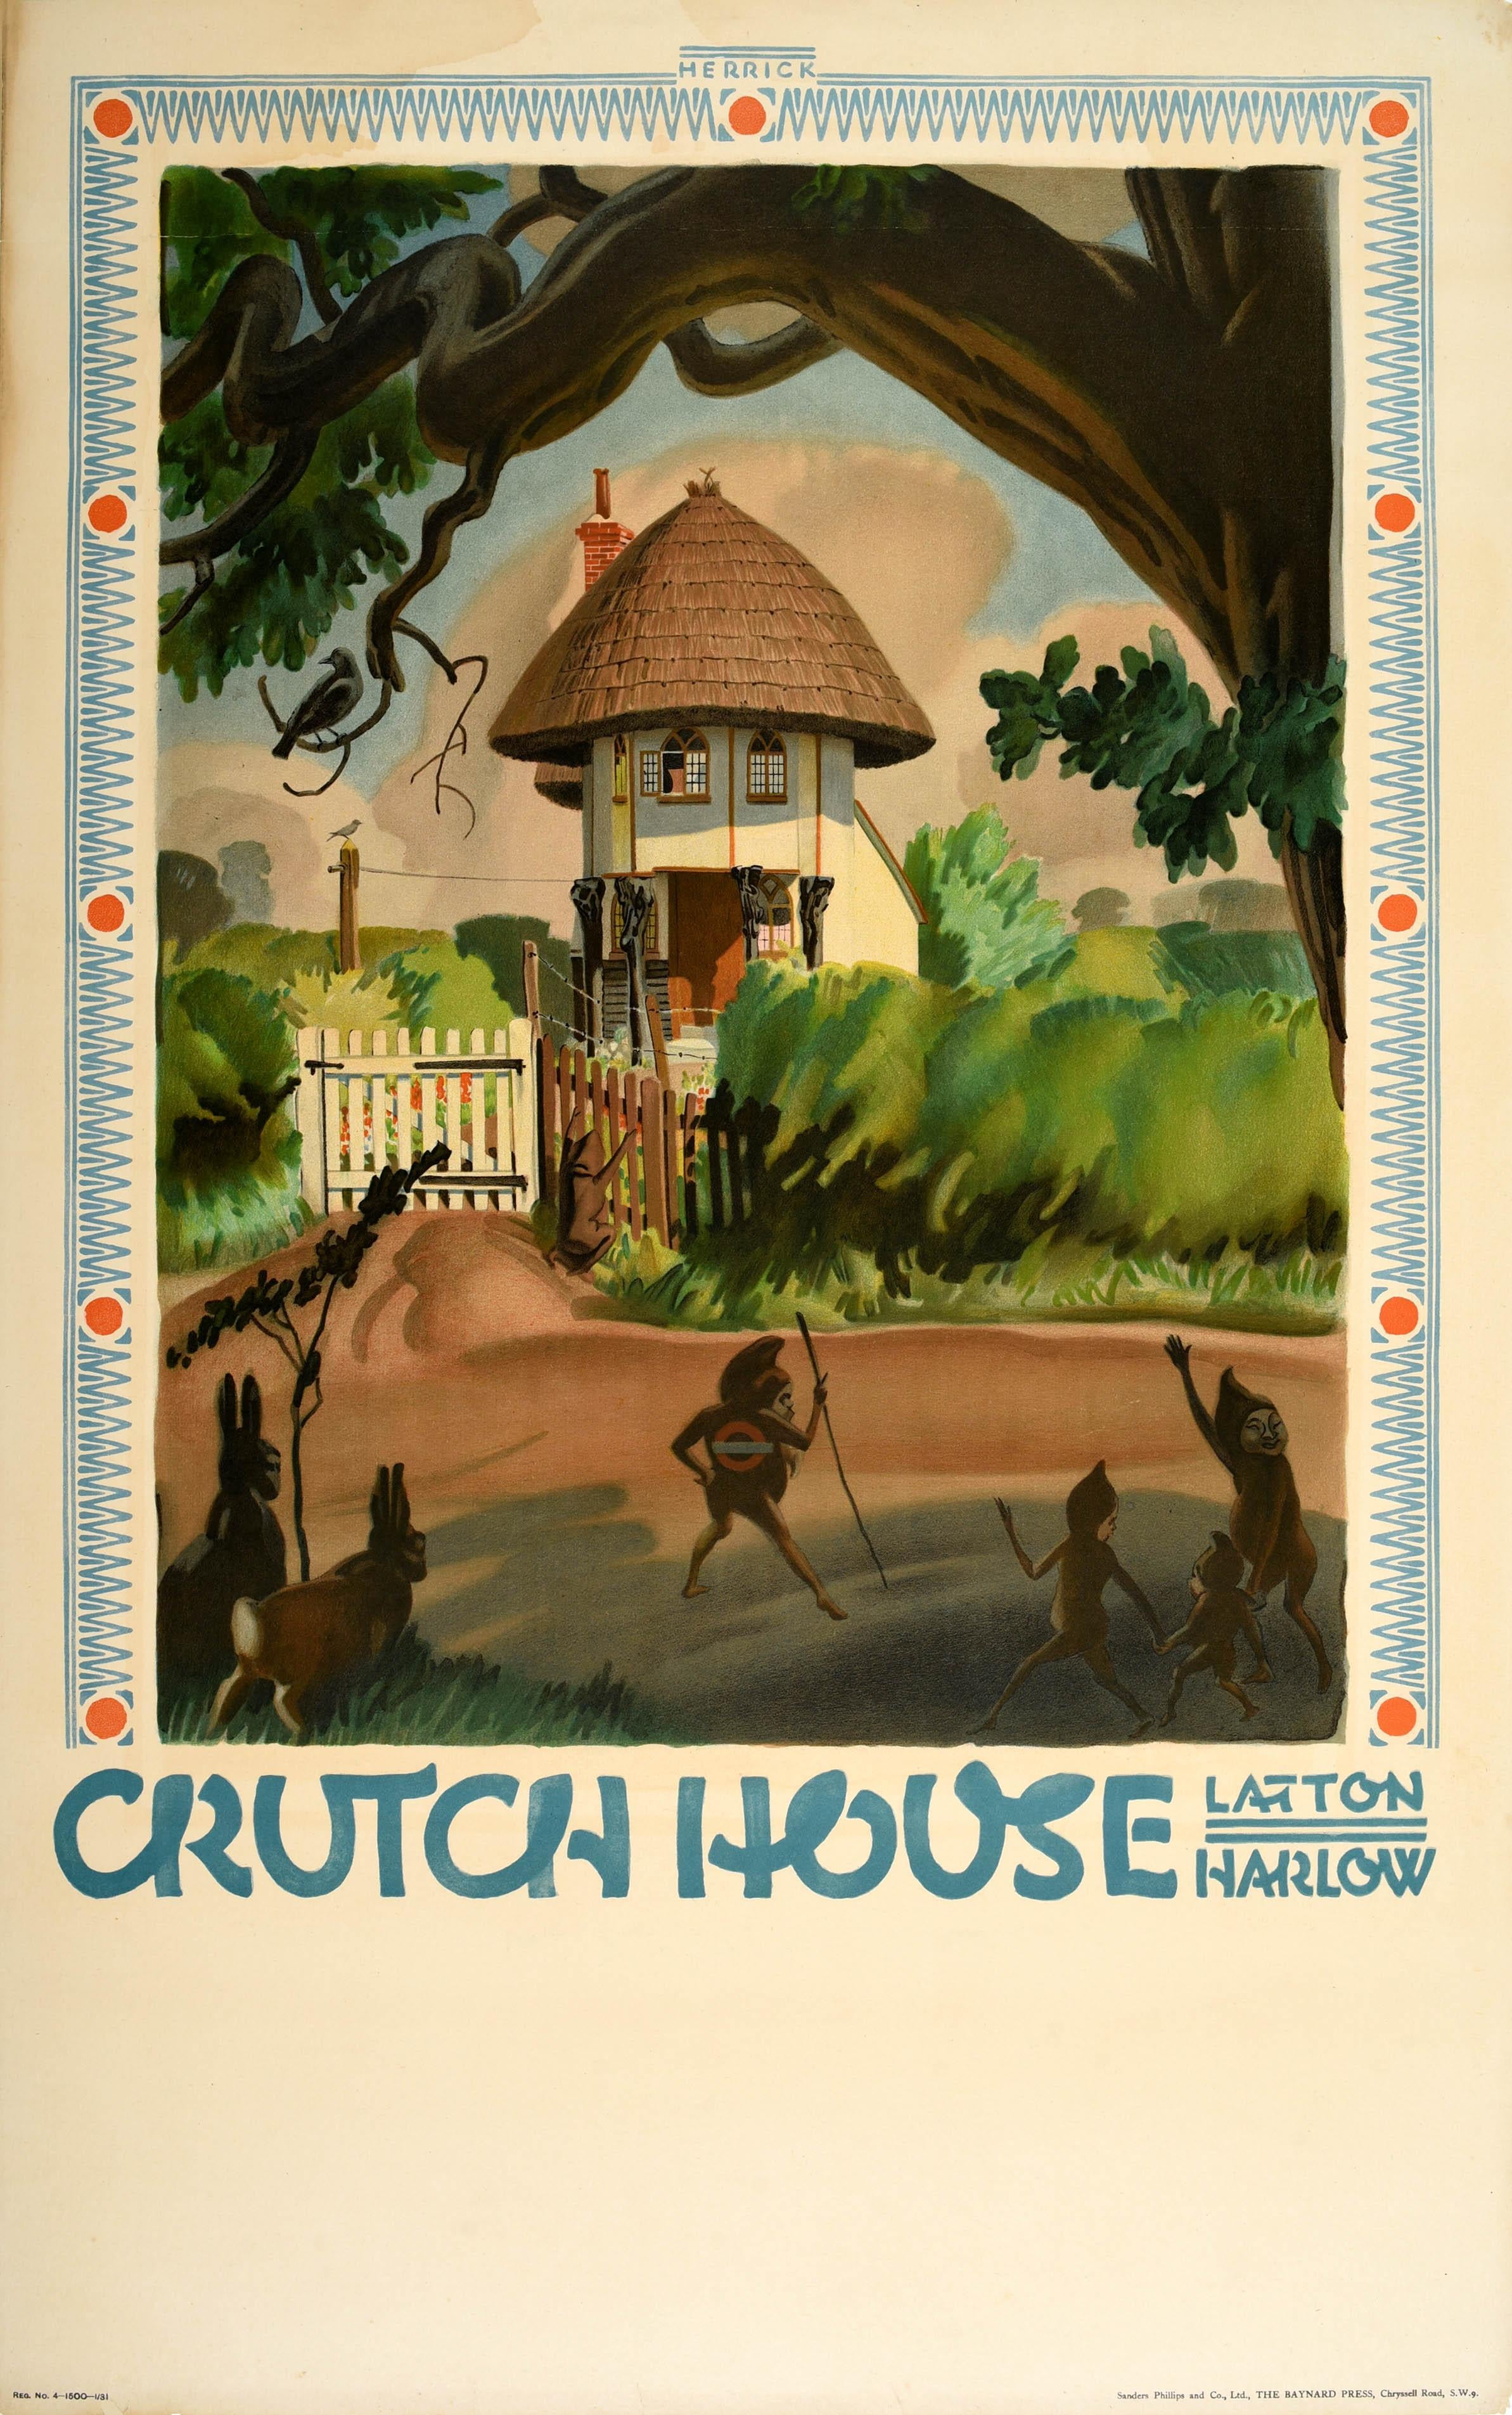 Frederick Charles Herrick Print - Original Vintage London Transport Travel Poster Crutch House Latton Harlow Pixie